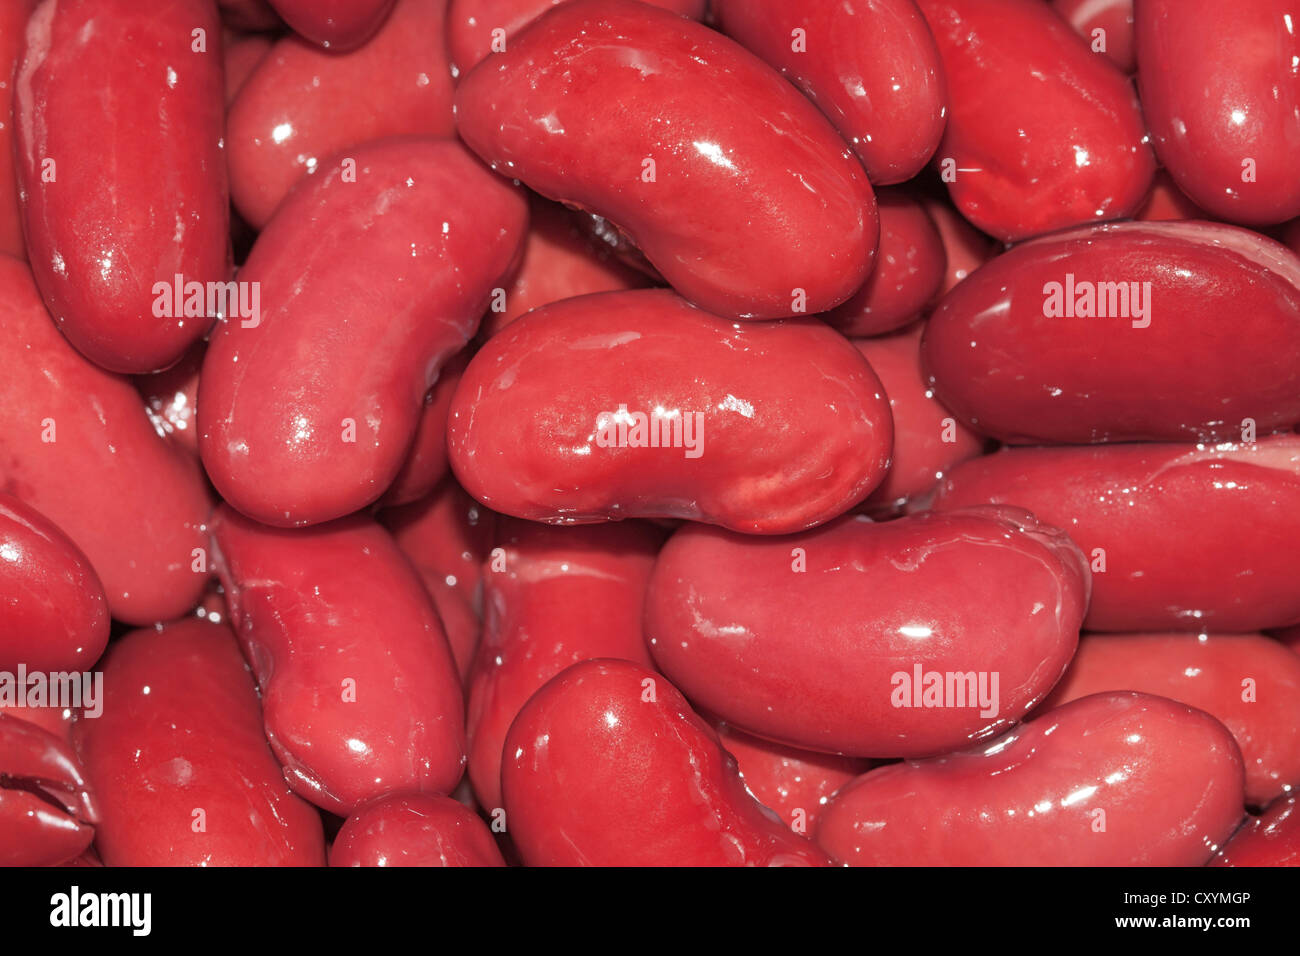 Red Kidney beans (Phaseolus vulgaris) Stock Photo